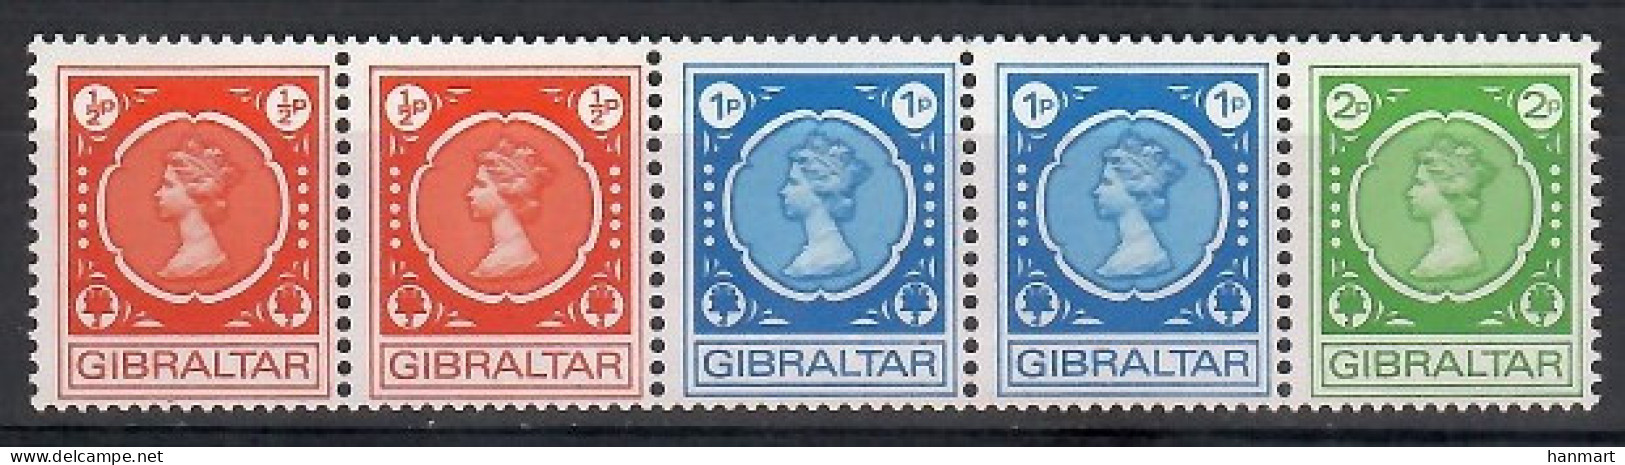 Gibraltar 1971 Mi 276-278 MNH  (ZE1 GIBfun276-278) - Case Reali